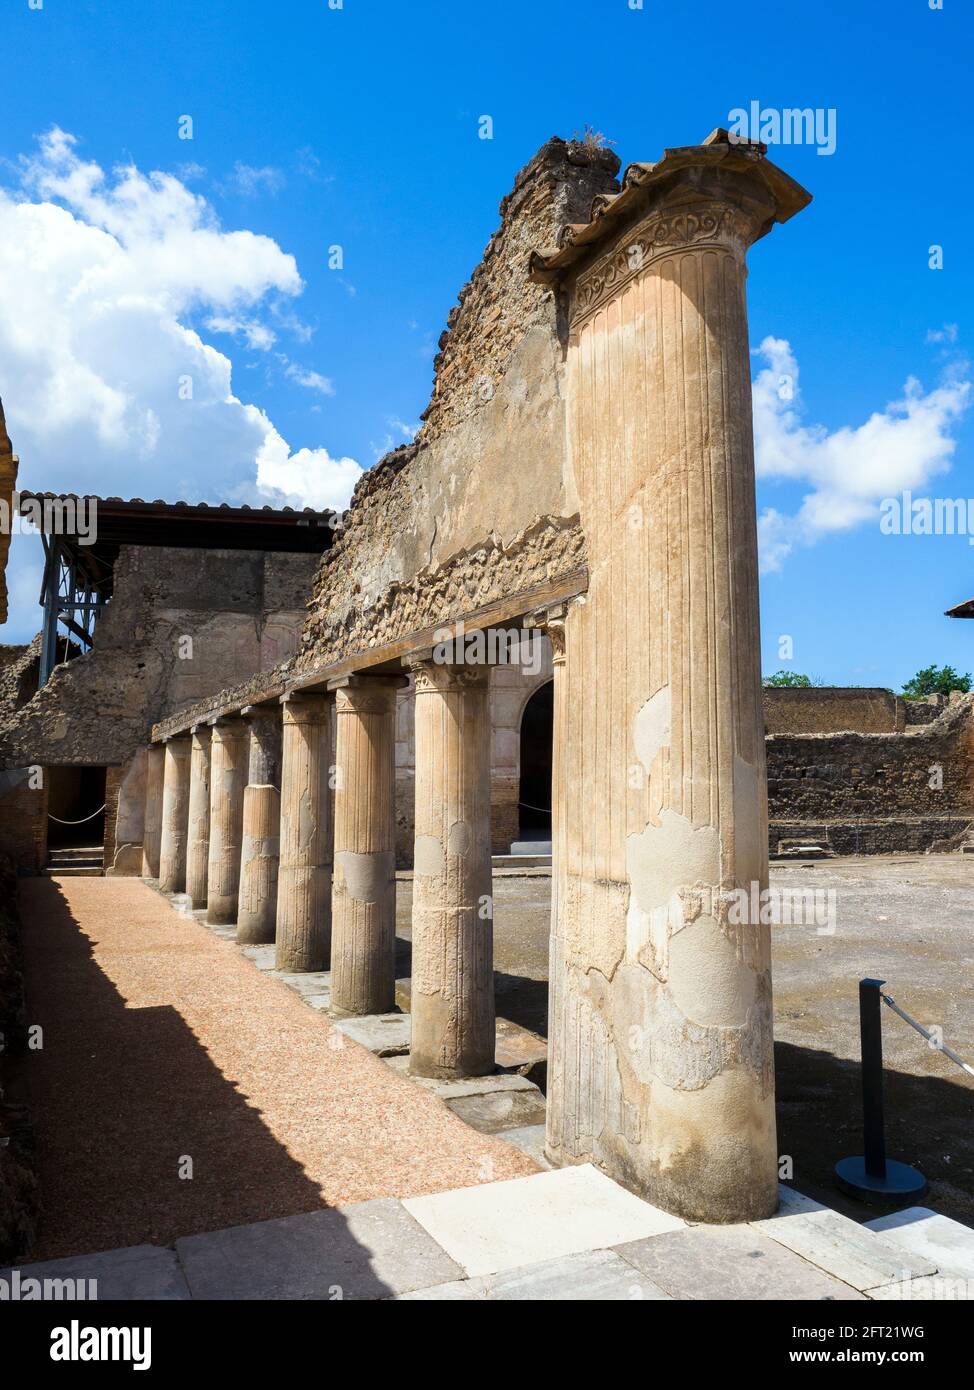 Stabian Baths (terme Stabiane) - Pompeii archaeological site, Italy Stock Photo